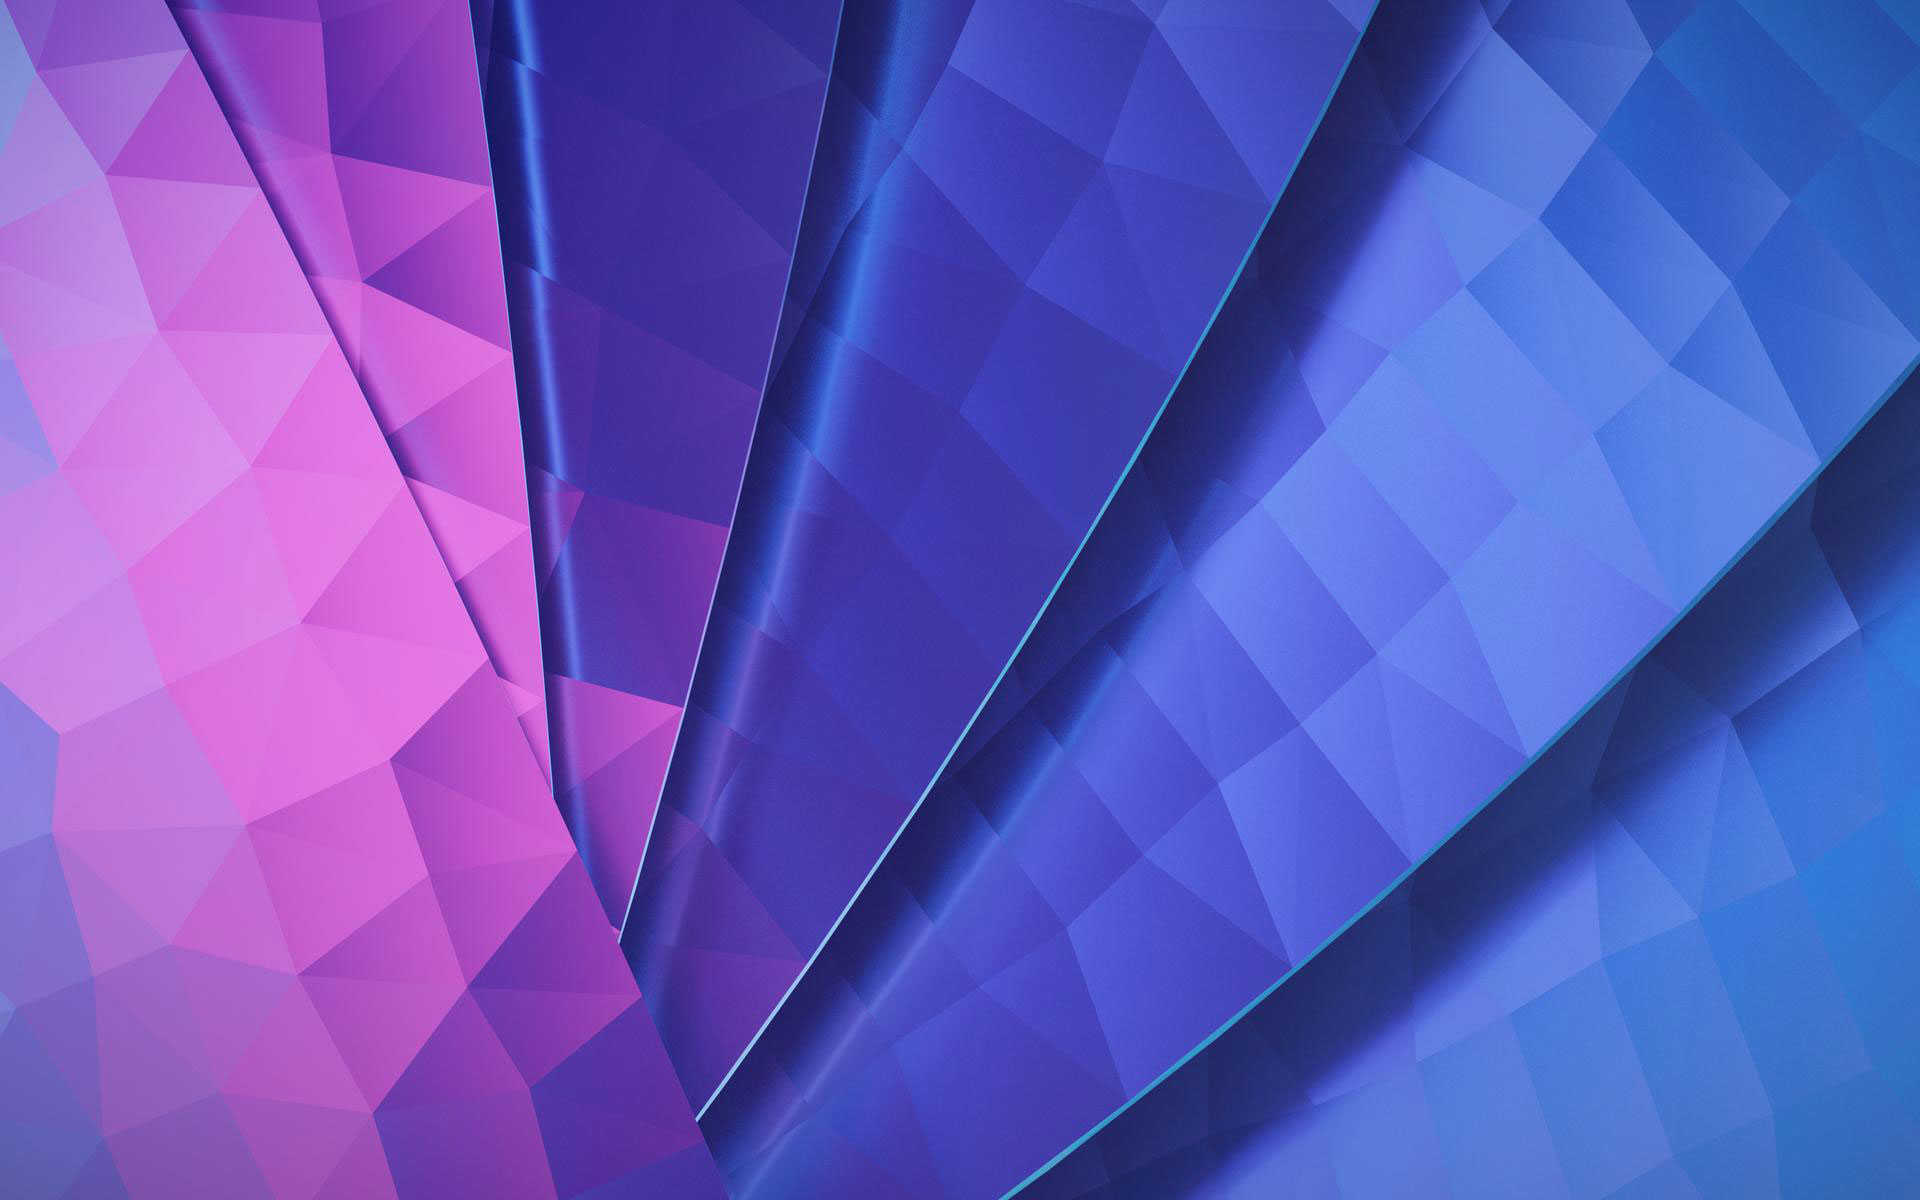 KDE's Latest Plasma Wallpaper is Here And It's …Shiny - OMG! Ubuntu!